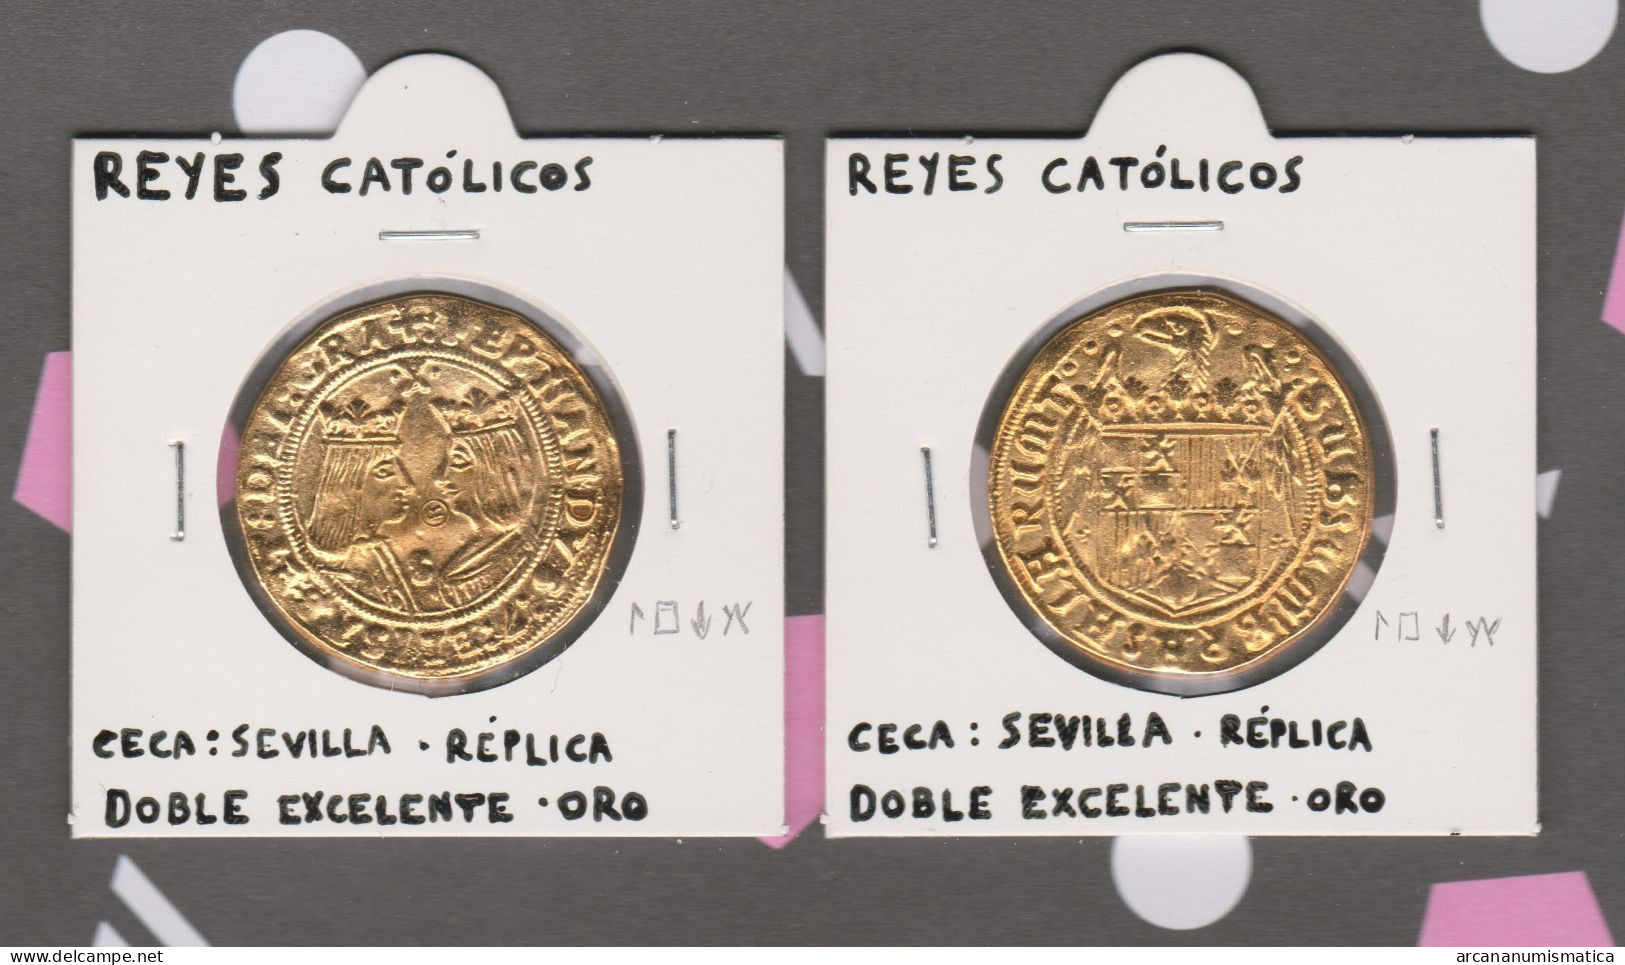 REYES CATOLICOS  DOBLE EXCELENTE - ORO CECA: SEVILLA  Réplica   T-DL-13.434 - Imitazioni